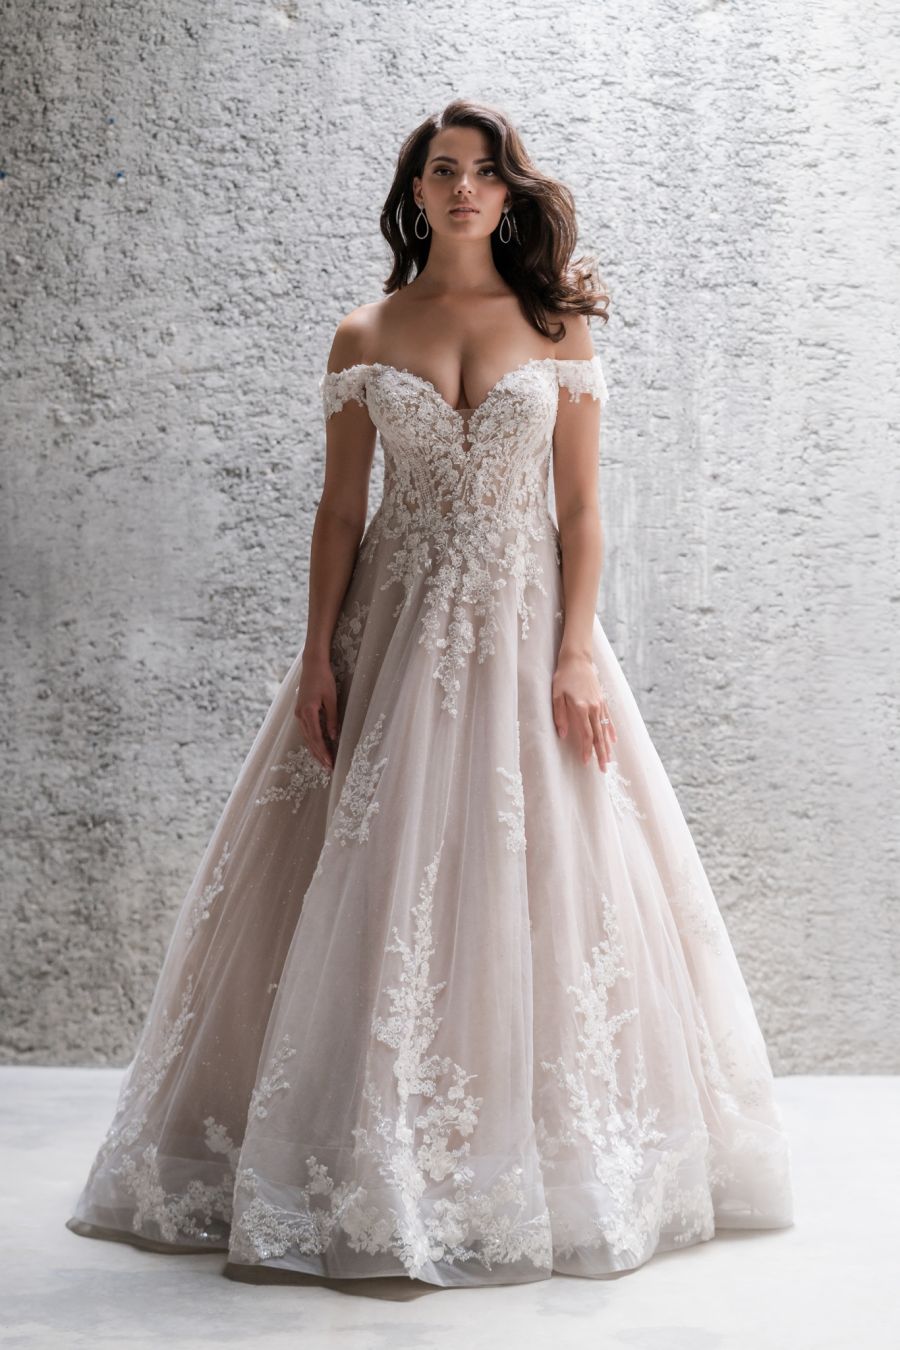 Olivia Bottega Princess Lace Off-the-Shoulders Wedding Dress Charlotte Wedding  Dress | The Knot